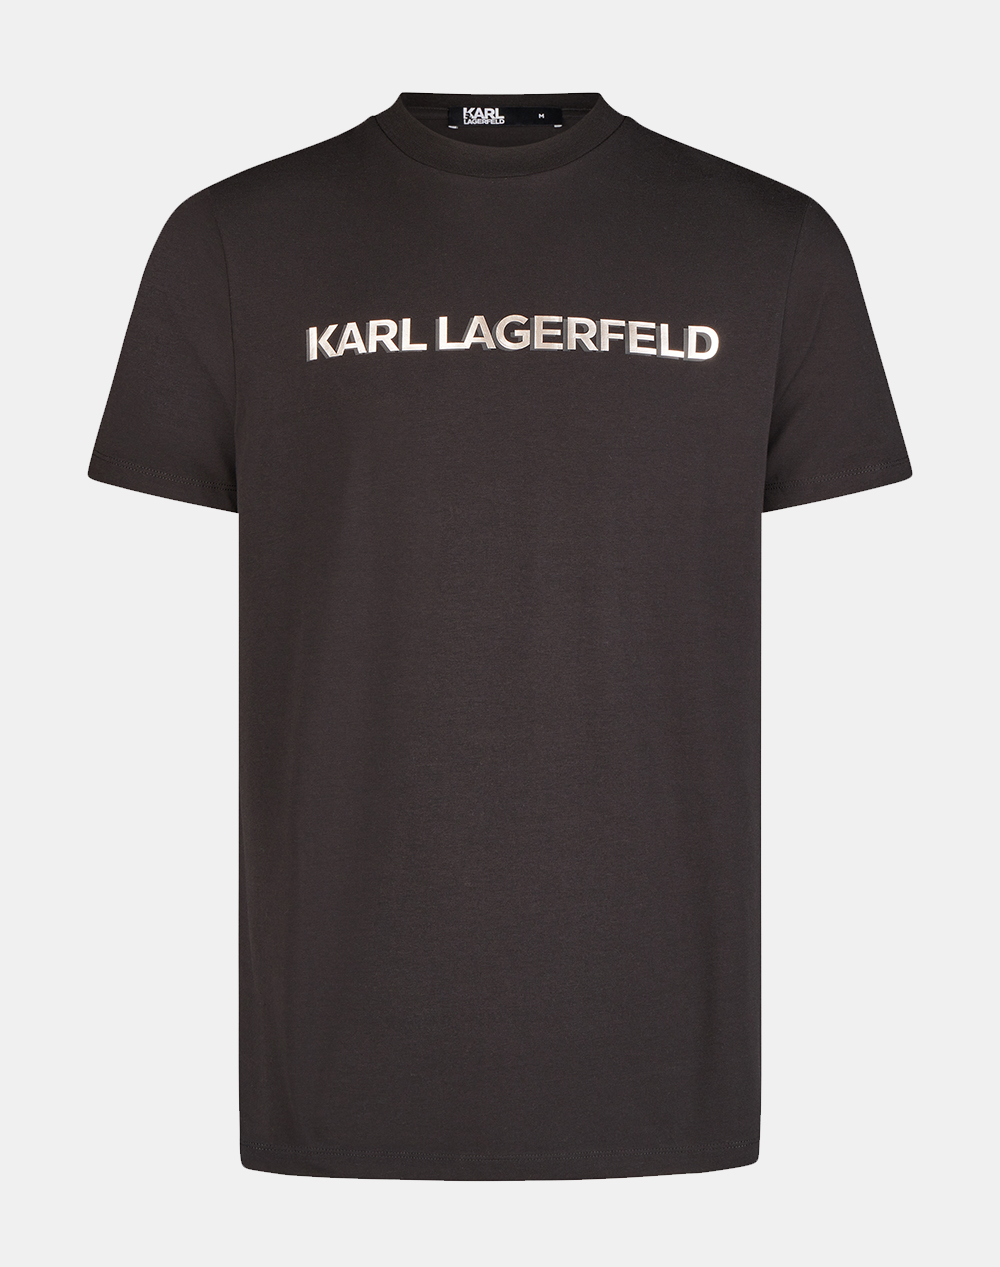 KARL LAGERFELD T-SHIRT CREWNECK 755053-542221-990 Black 3820AKARL3400124_5525